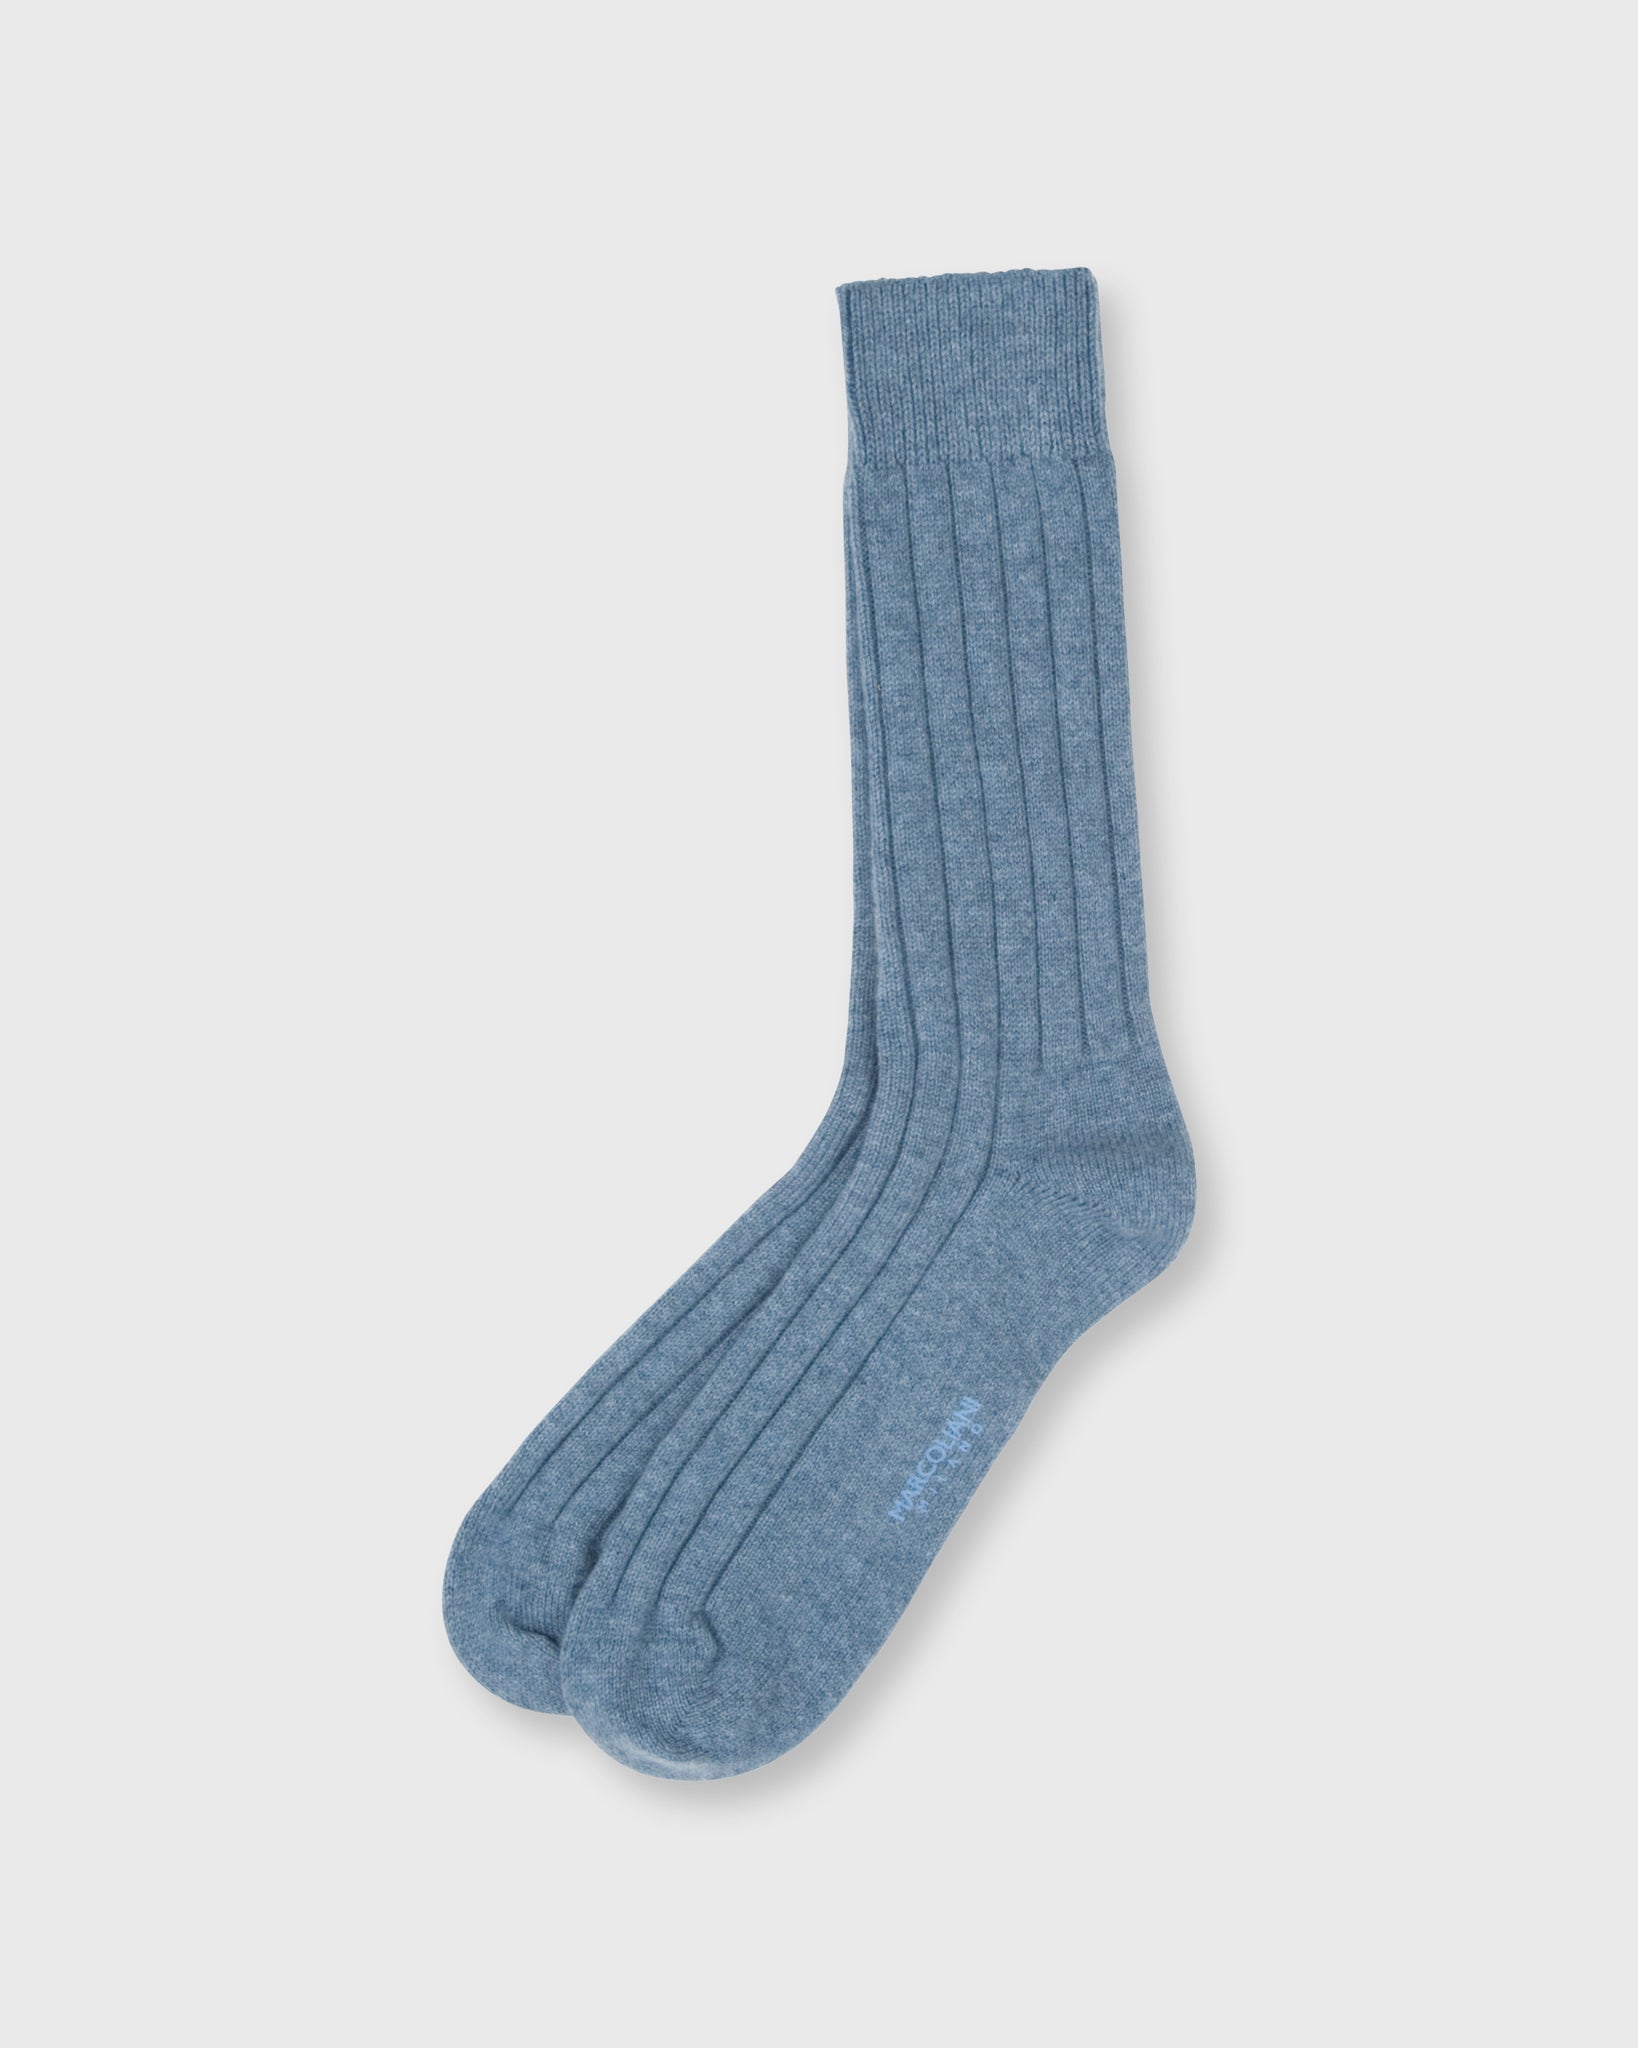 Trouser Dress Socks in Denim Blue Cashmere